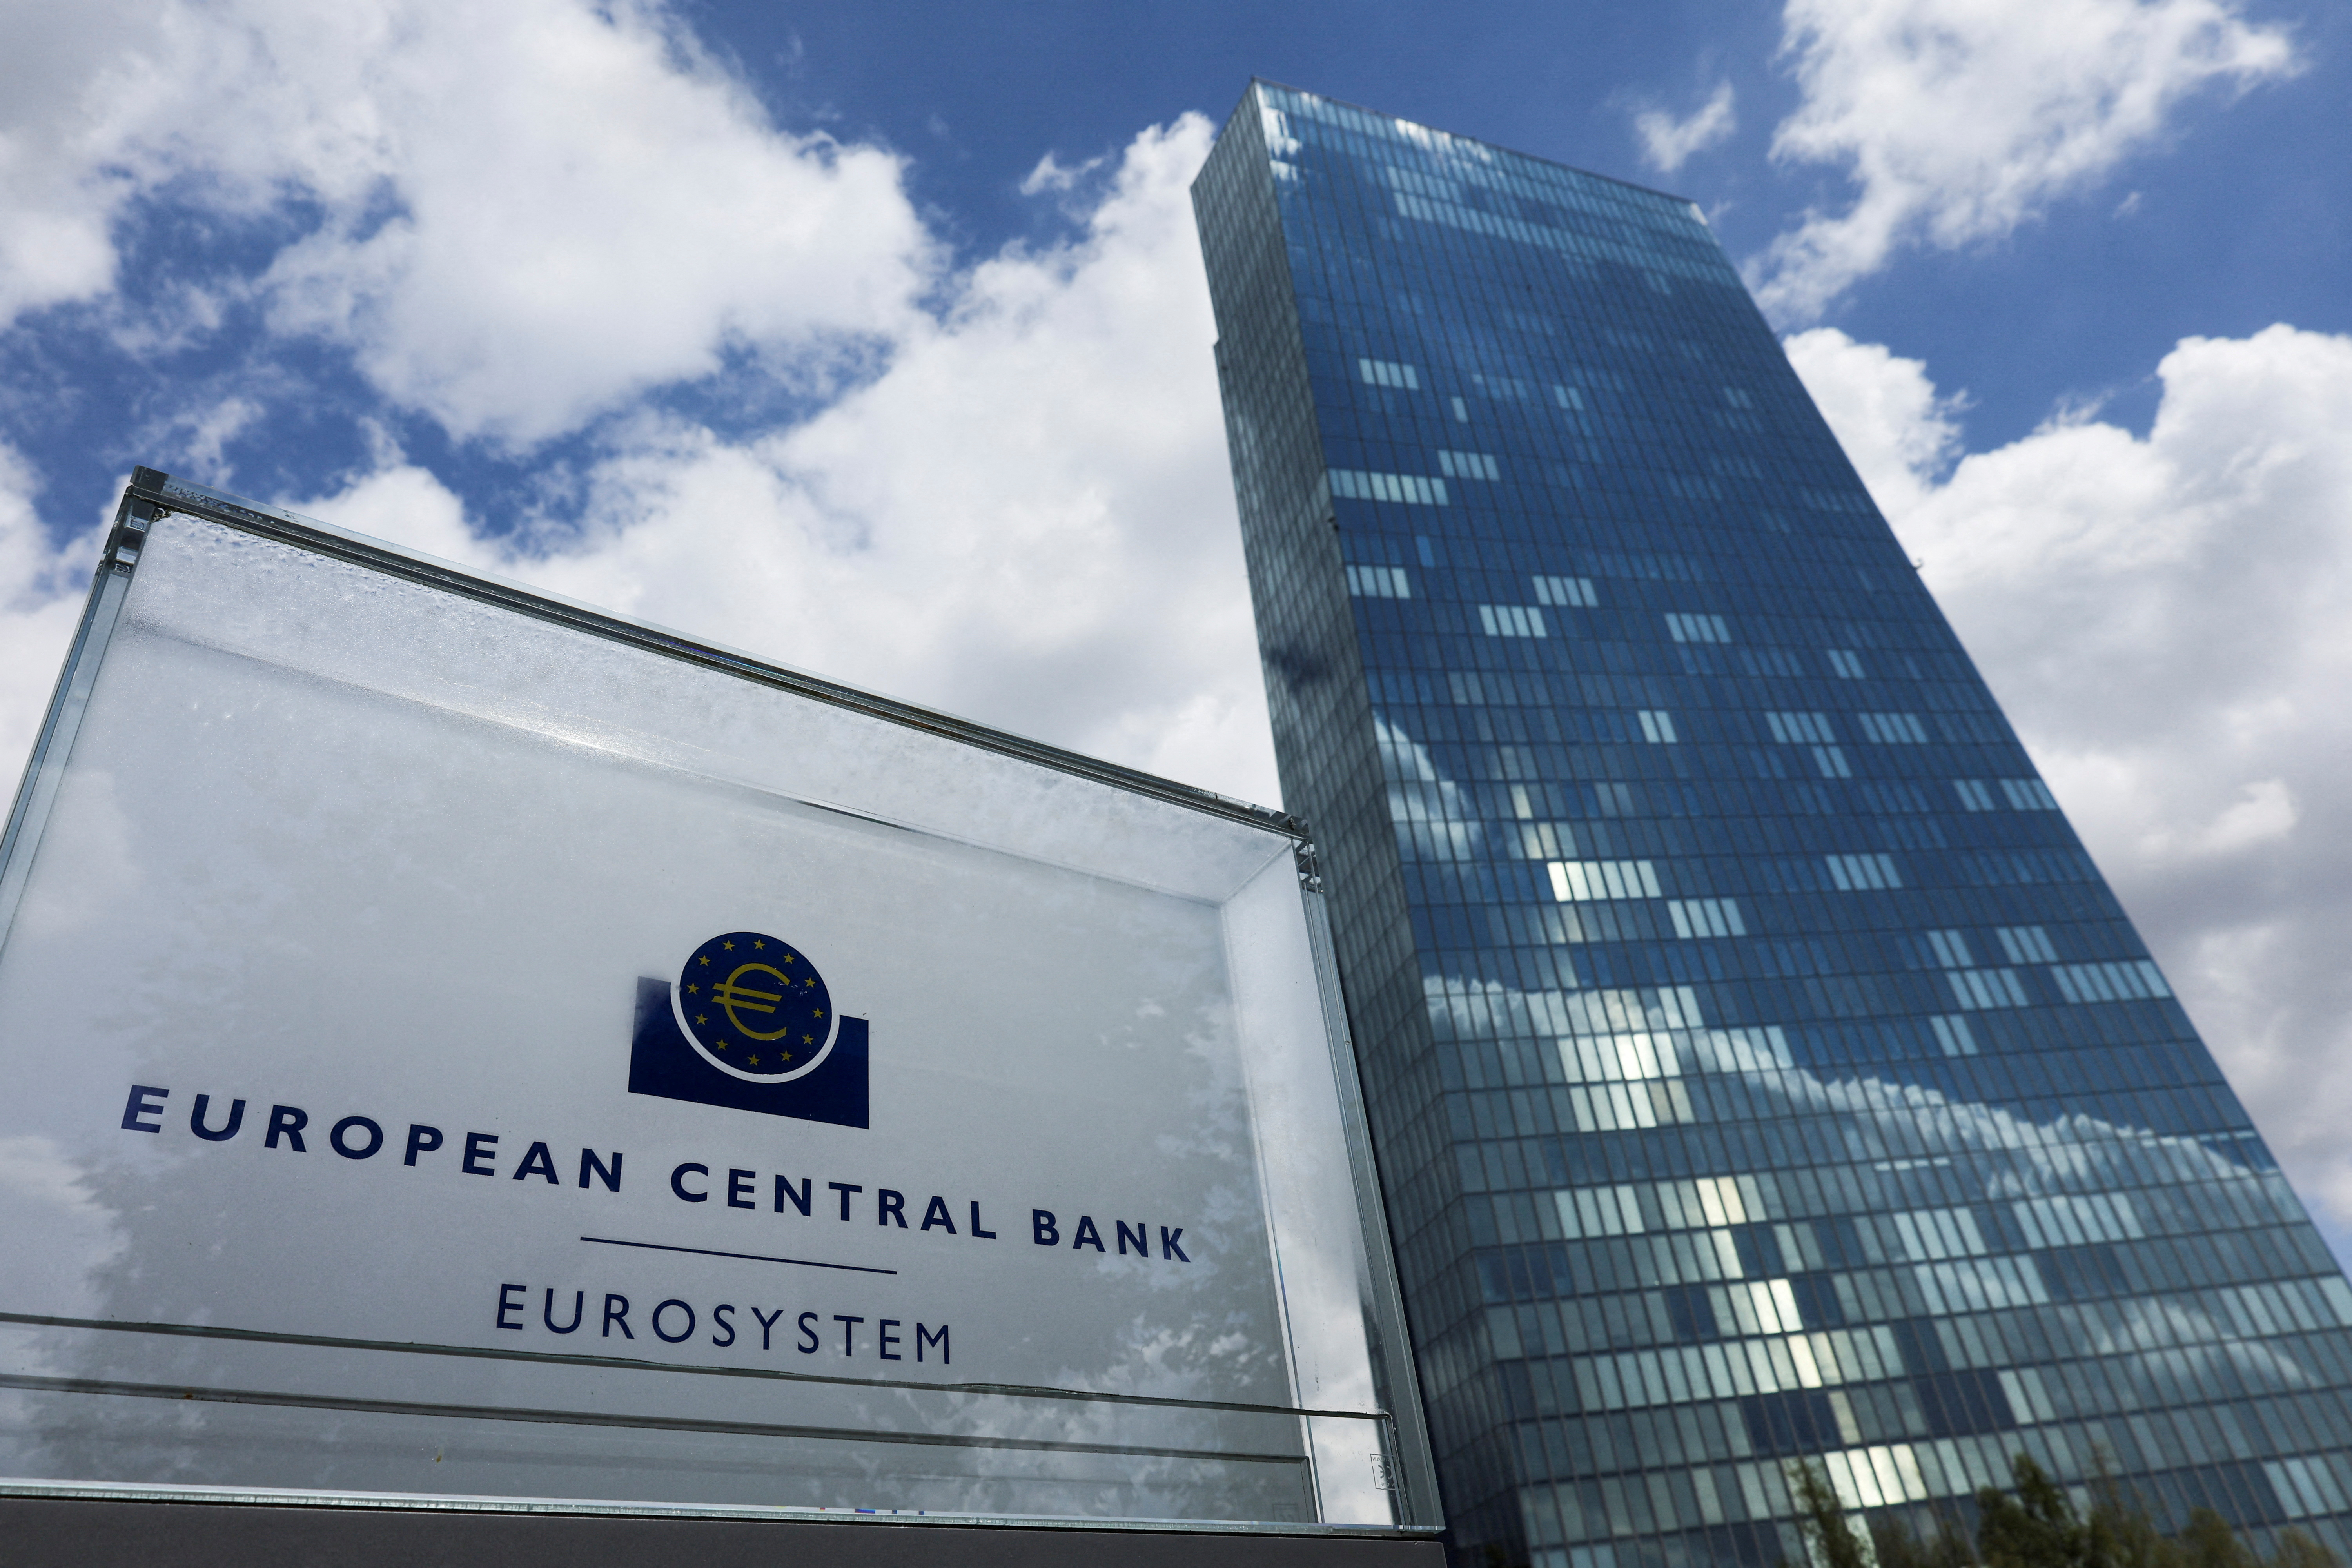 Signage seen outside European Central Bank building in Frankfurt, Germany